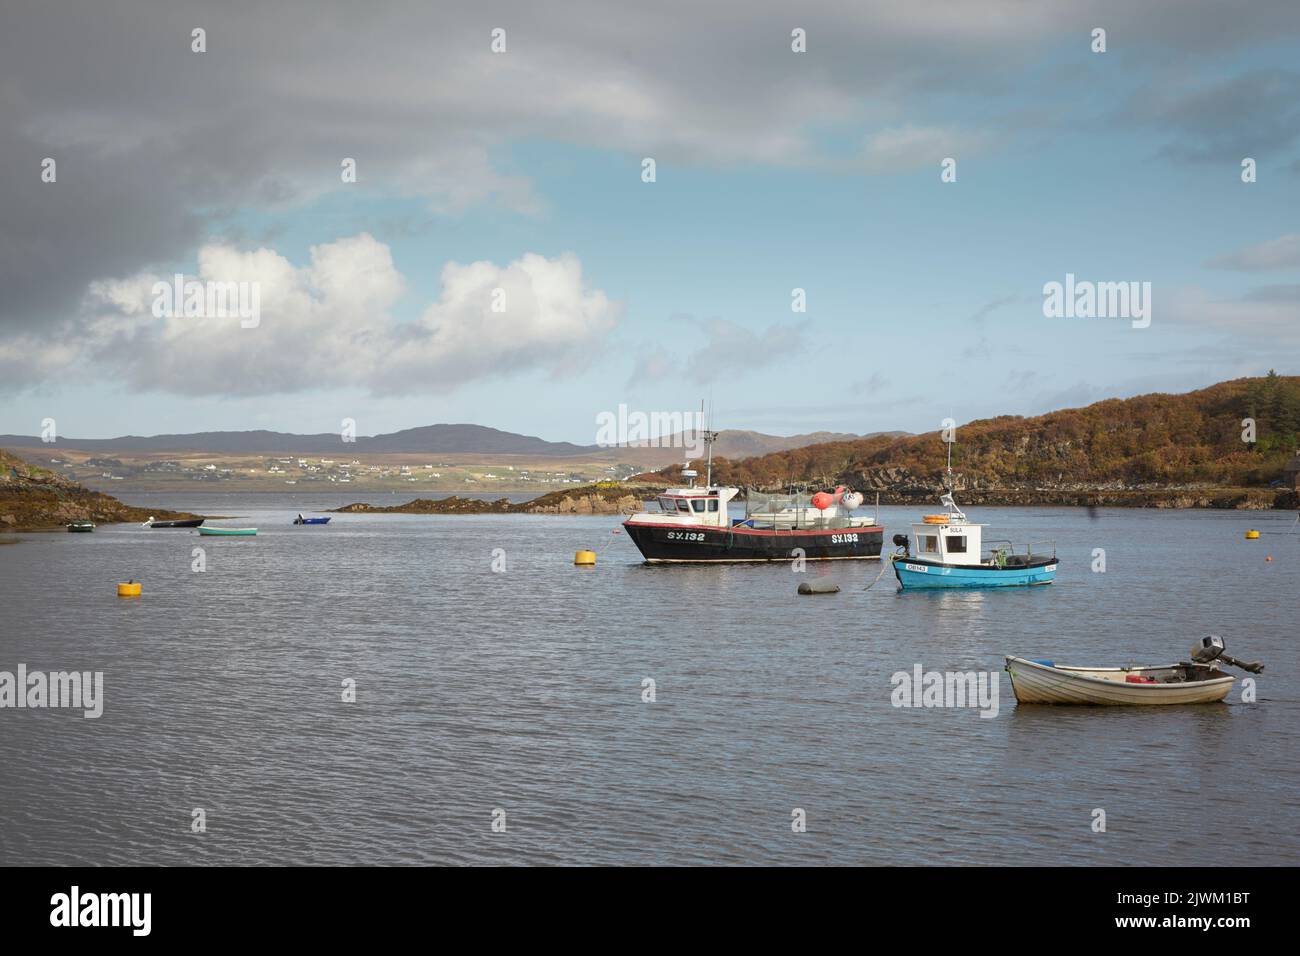 Fishing vessels Sealgairmara and Sula seen from Dry Island, Bedachro, Scotland. Stock Photo